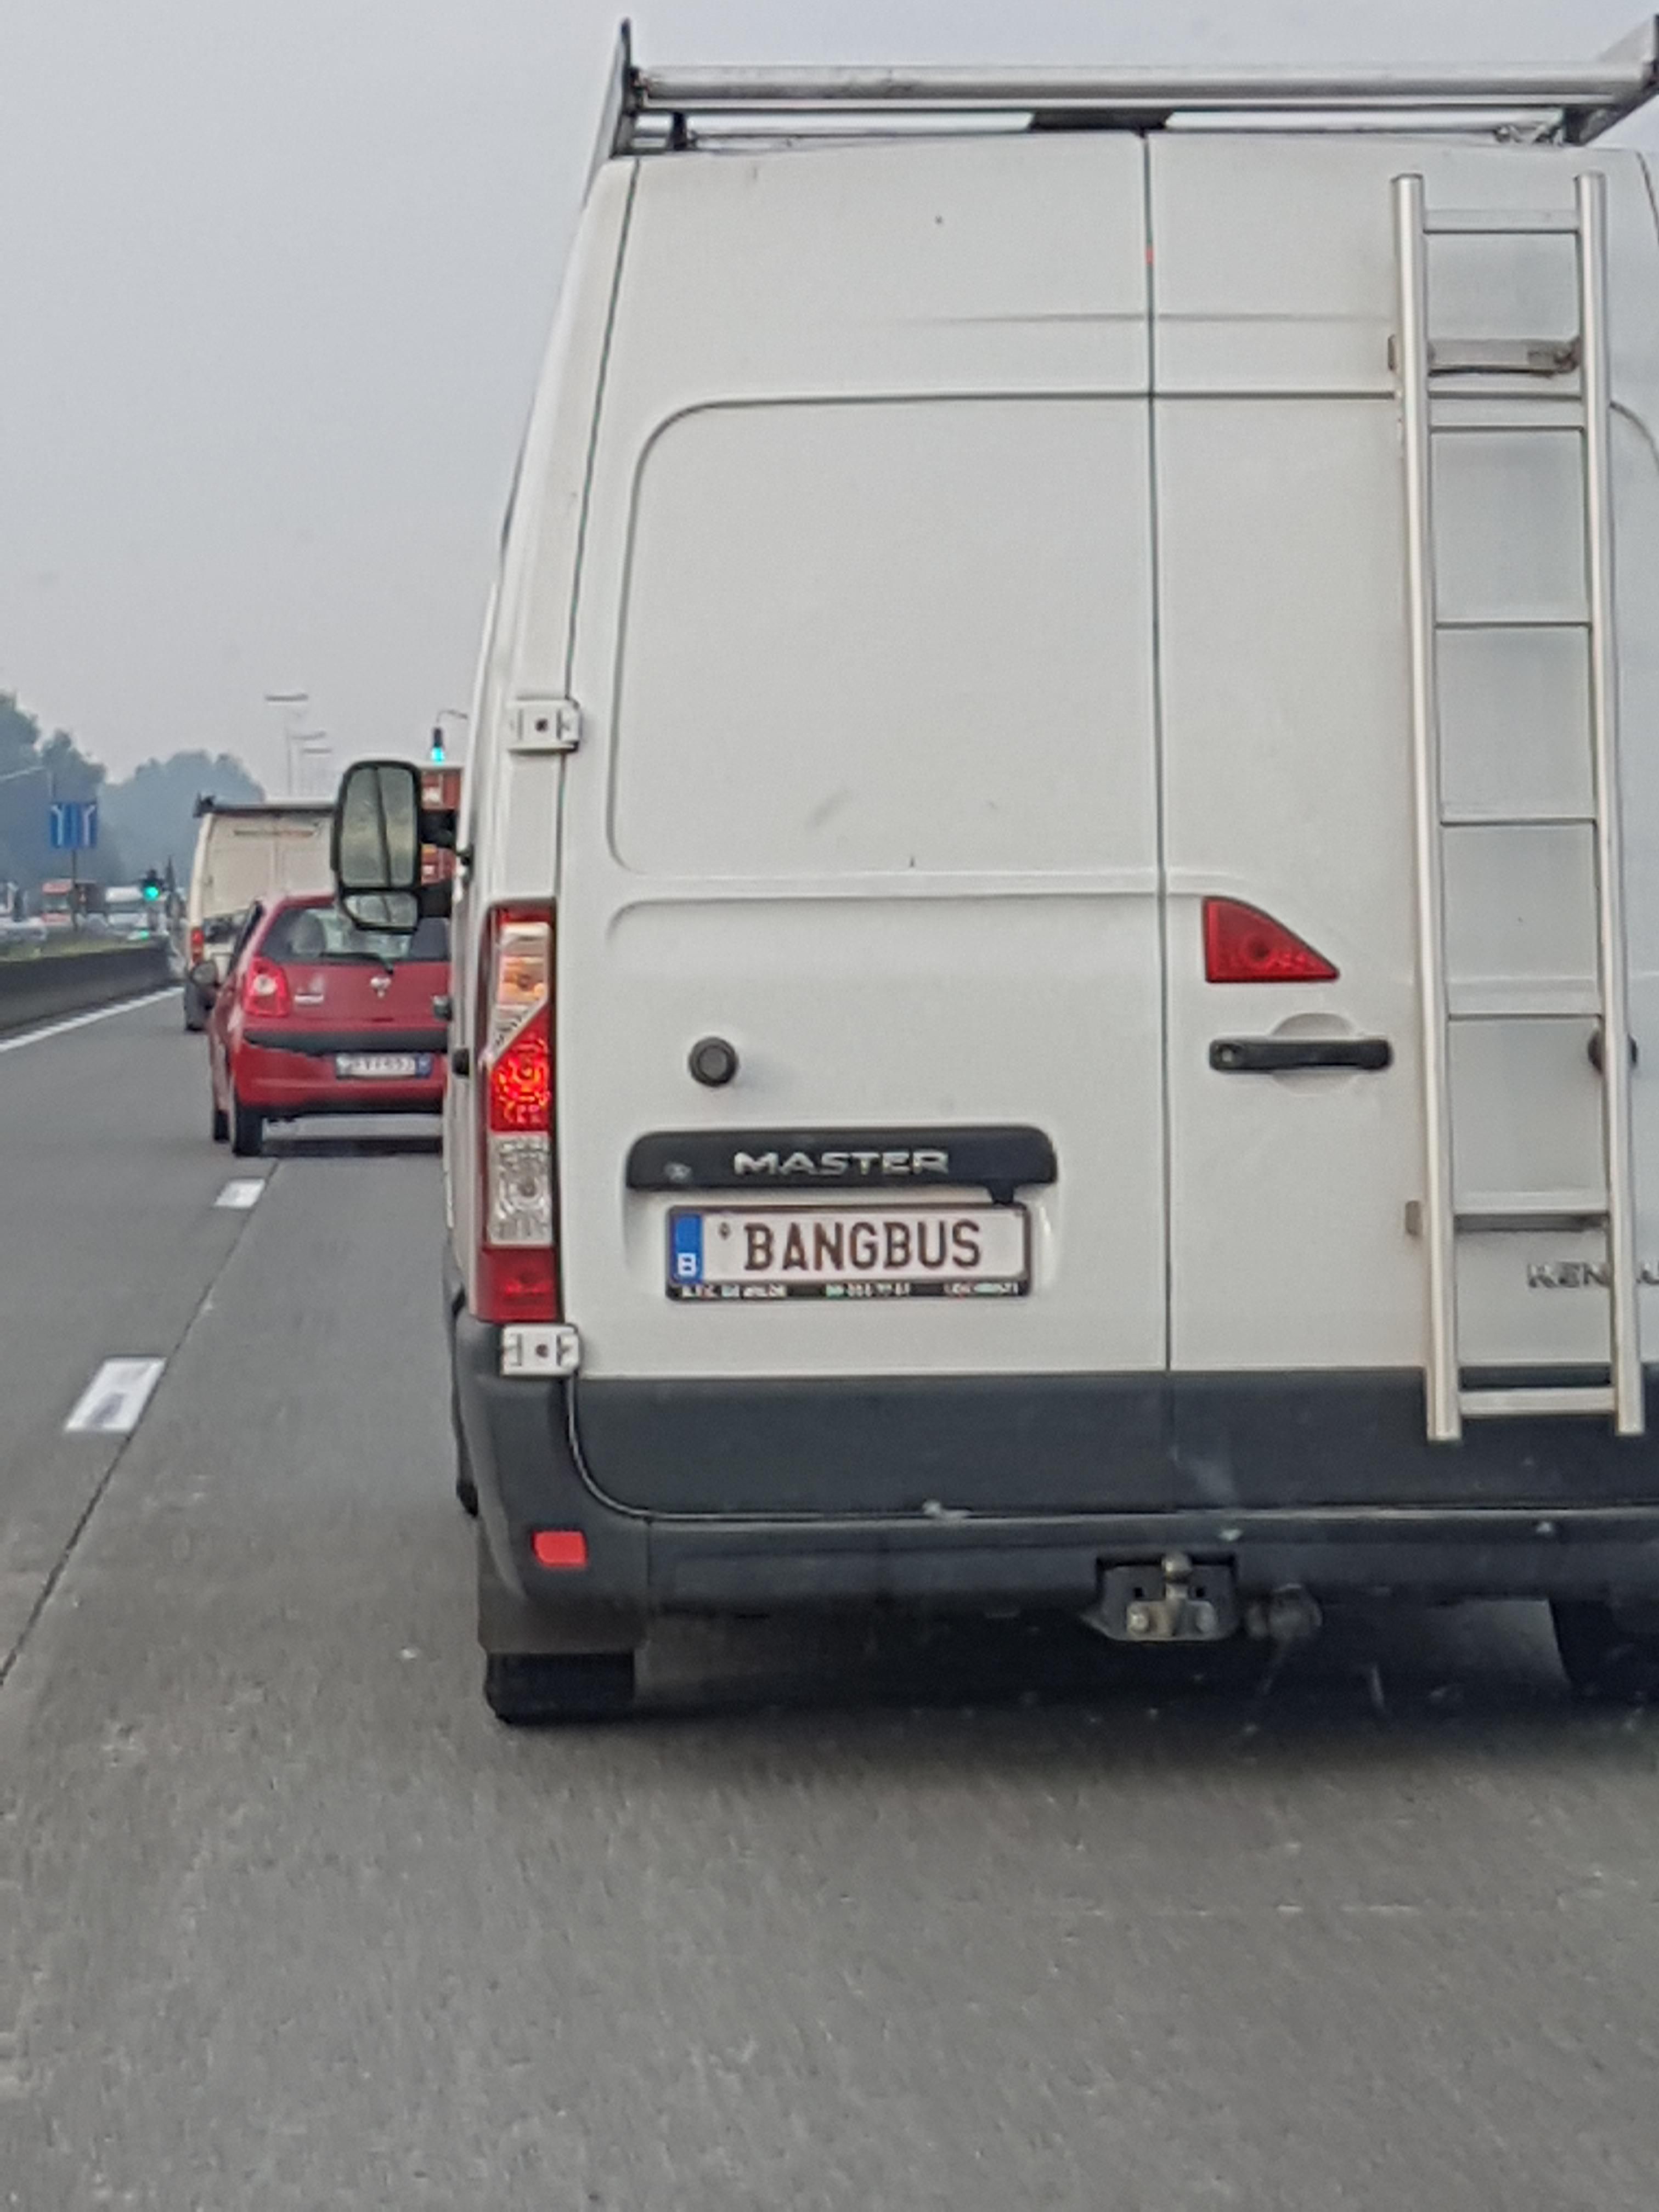 In Belgium you can get custom license plates...